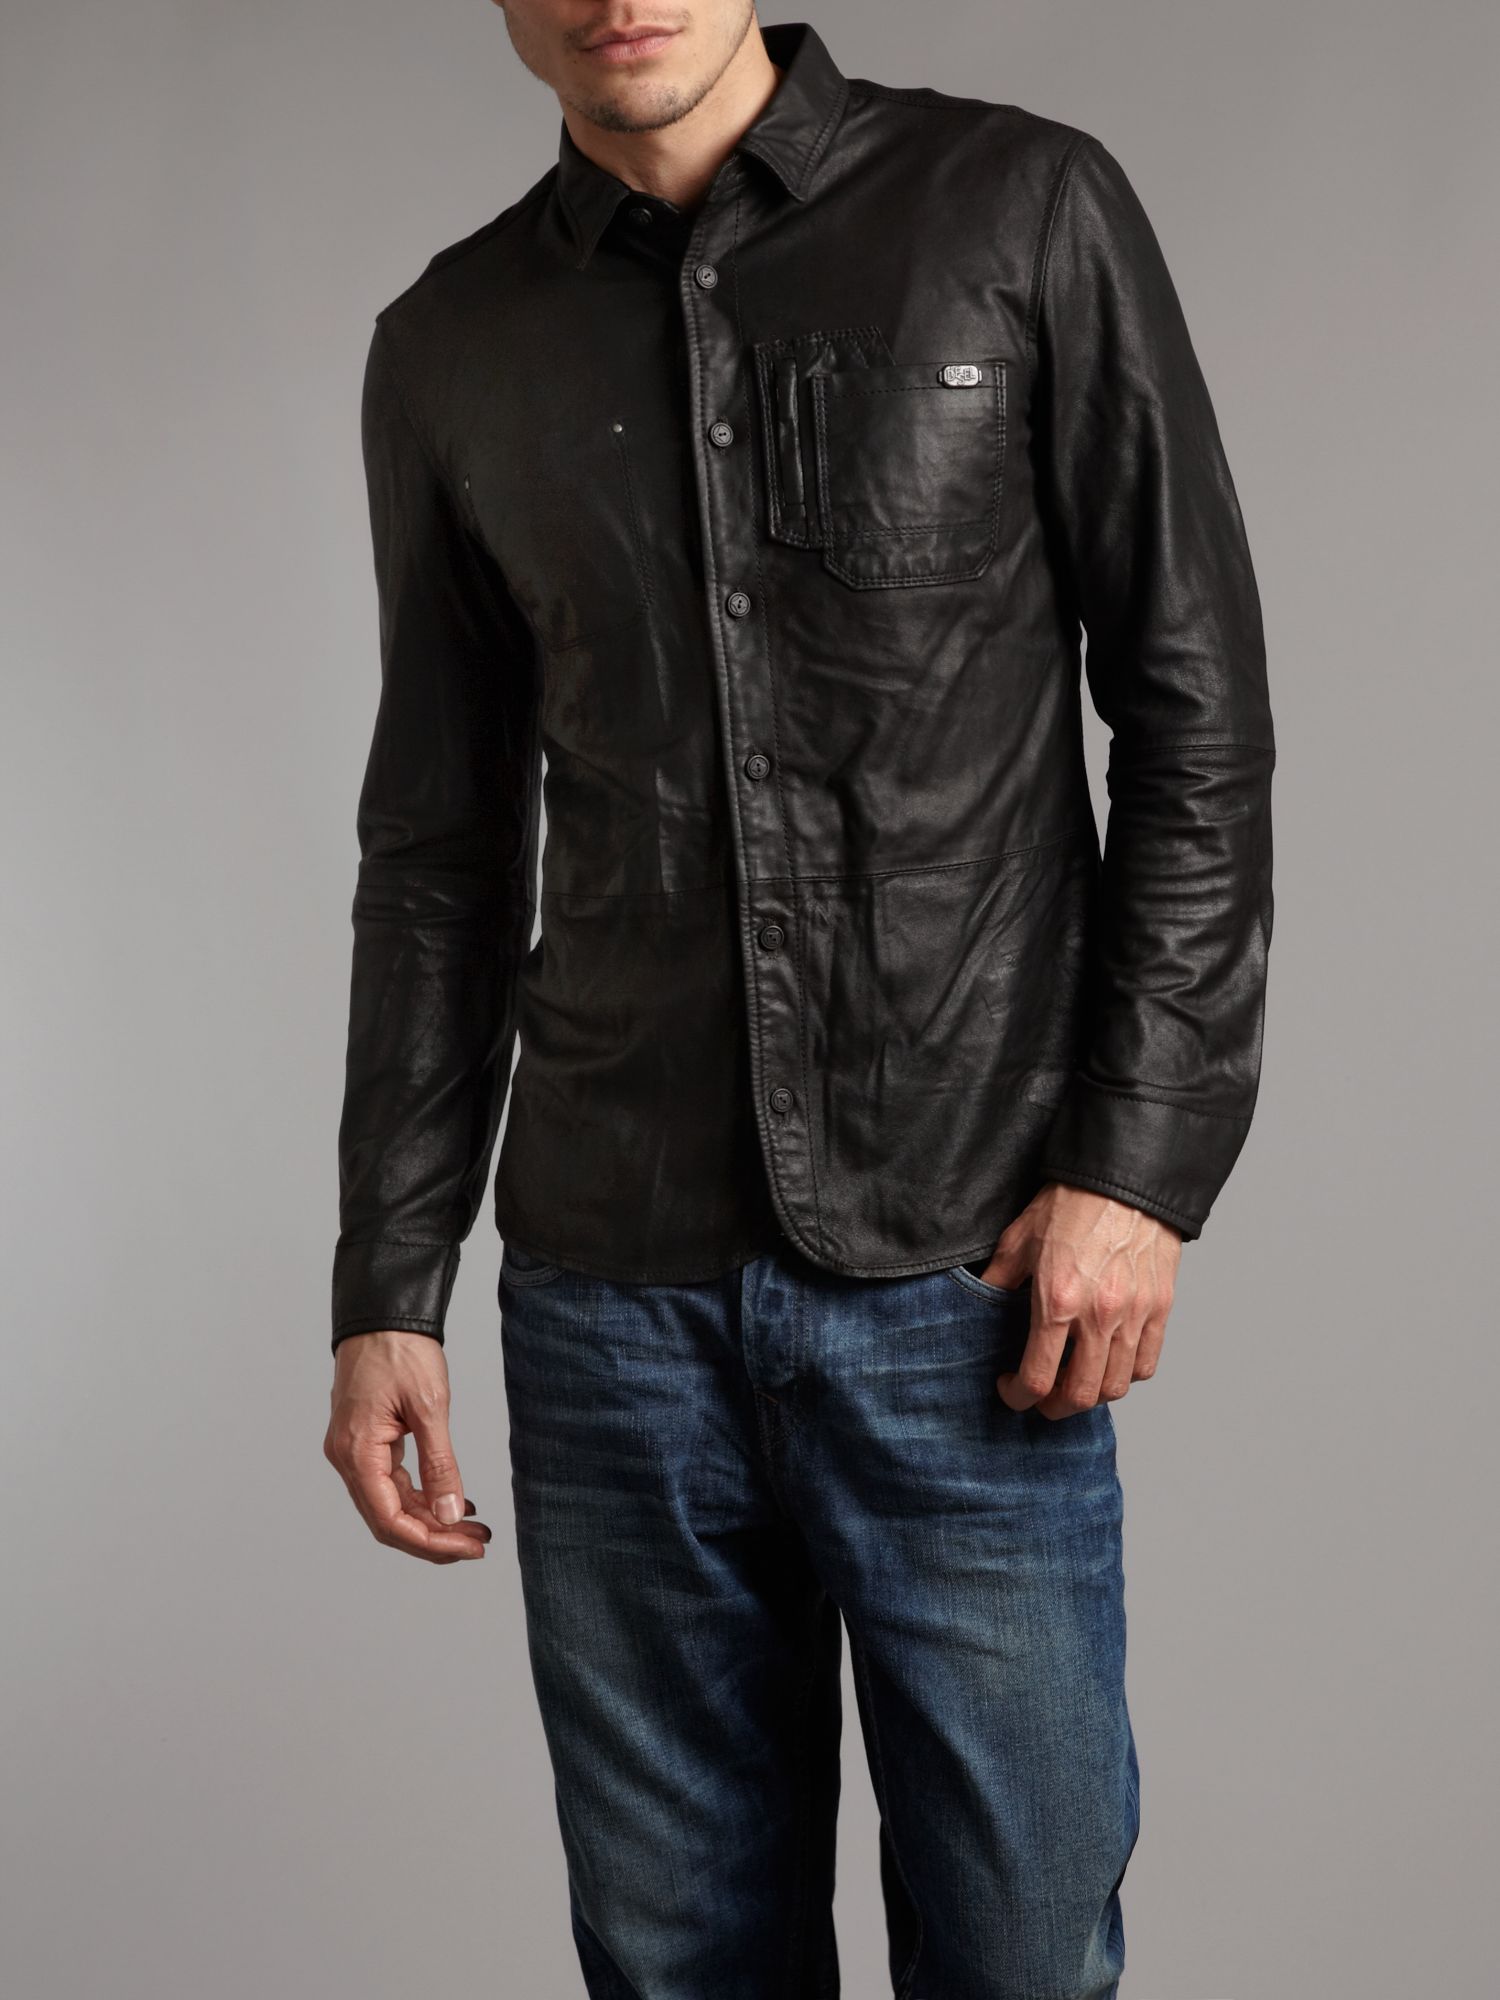 Diesel Longsleeve Leather Shirt in Black for Men | Lyst